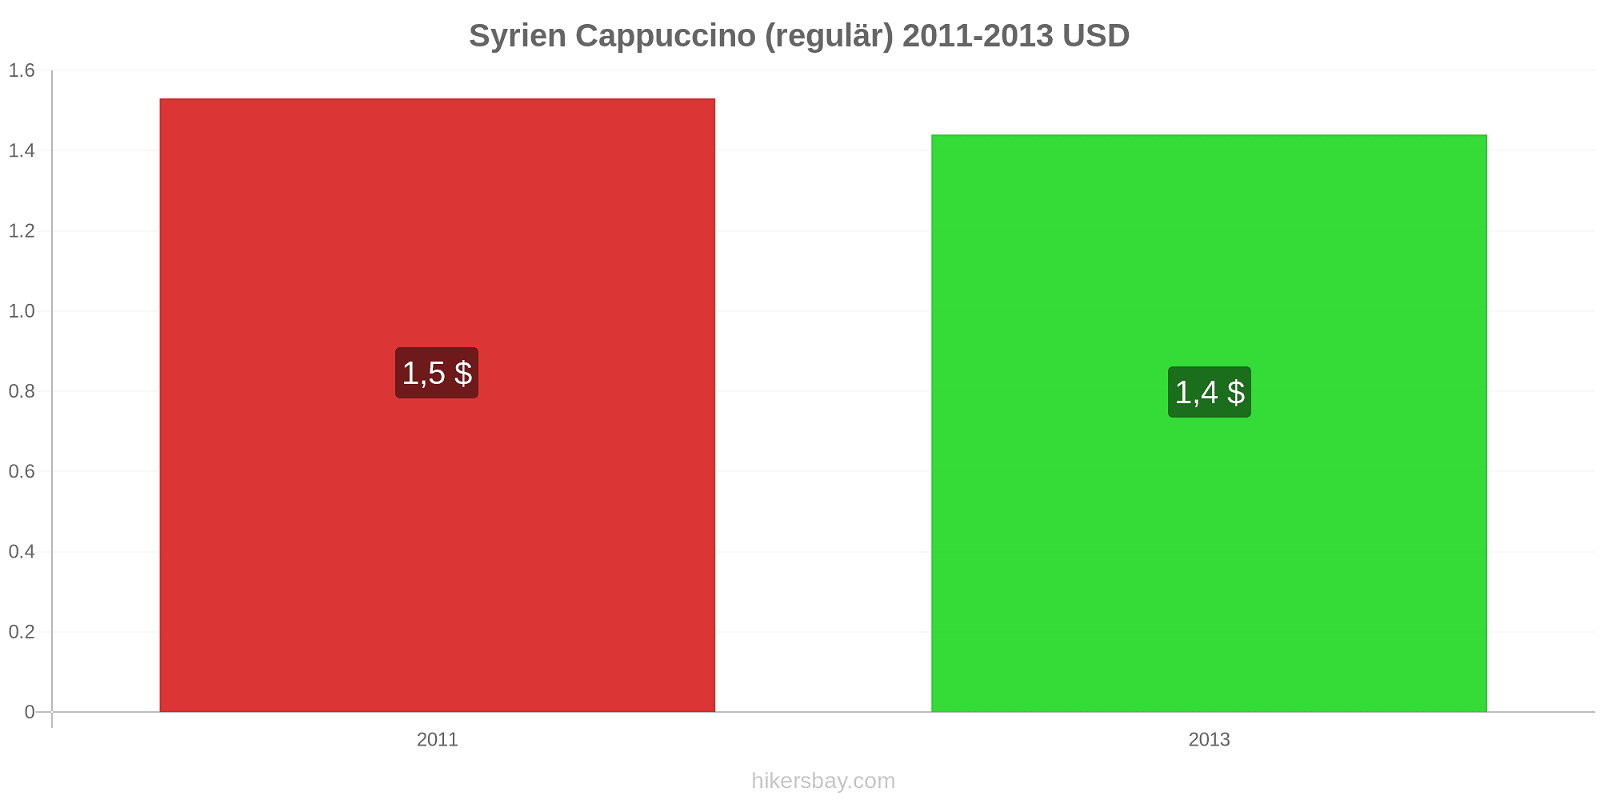 Syrien Preisänderungen Cappuccino (regulär) hikersbay.com